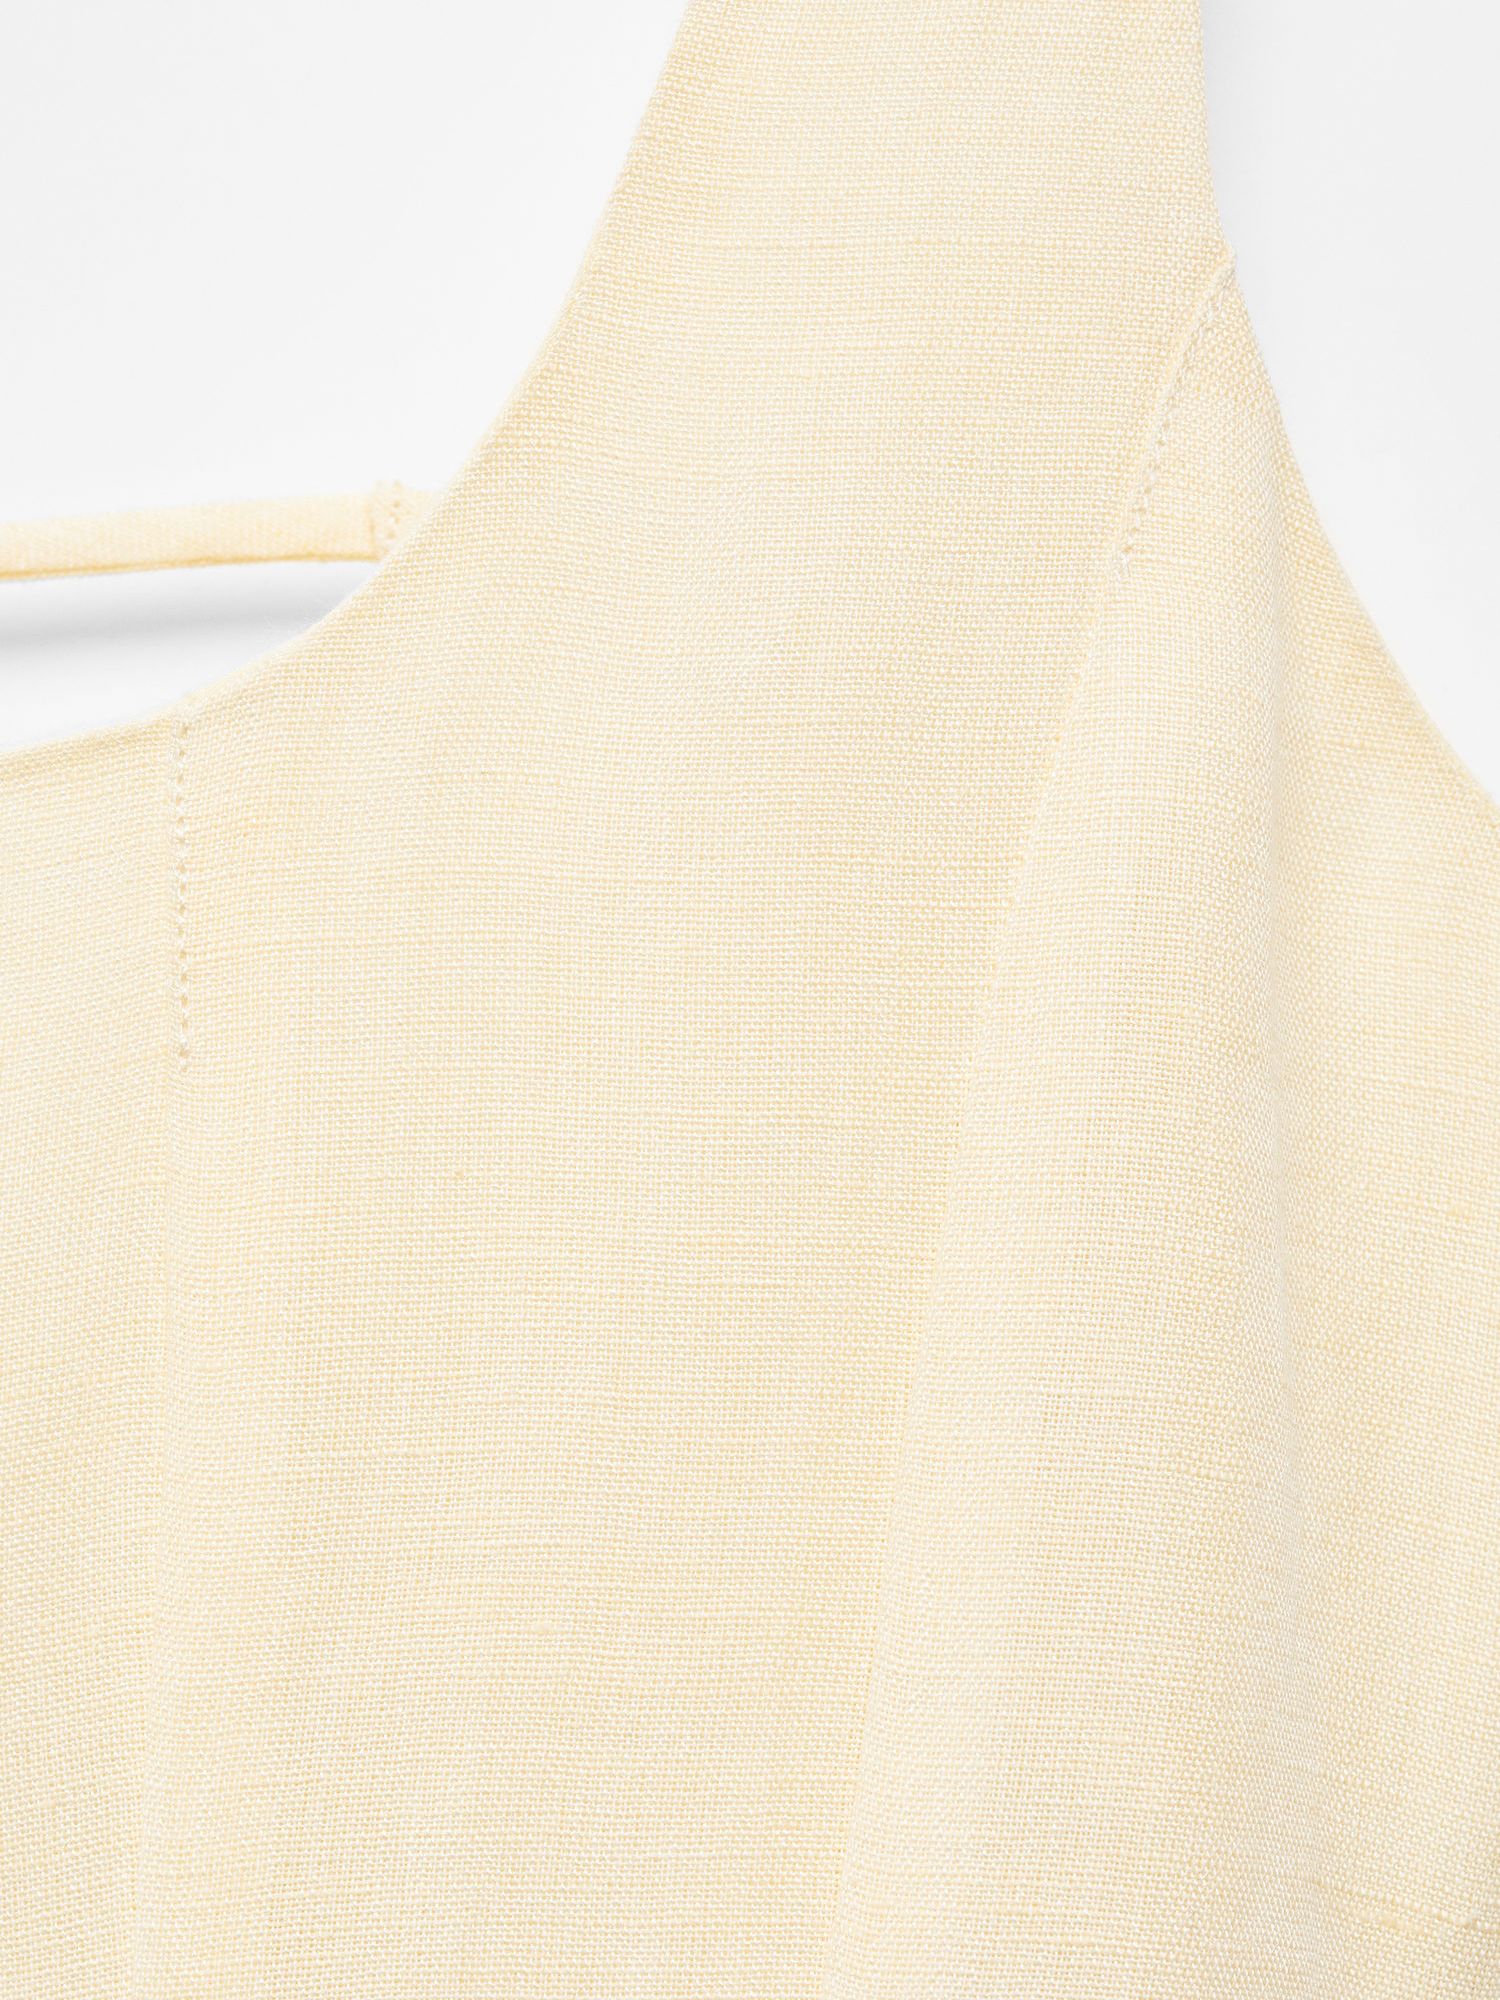 Mango France Linen Blend Midi Dress, Yellow, 10